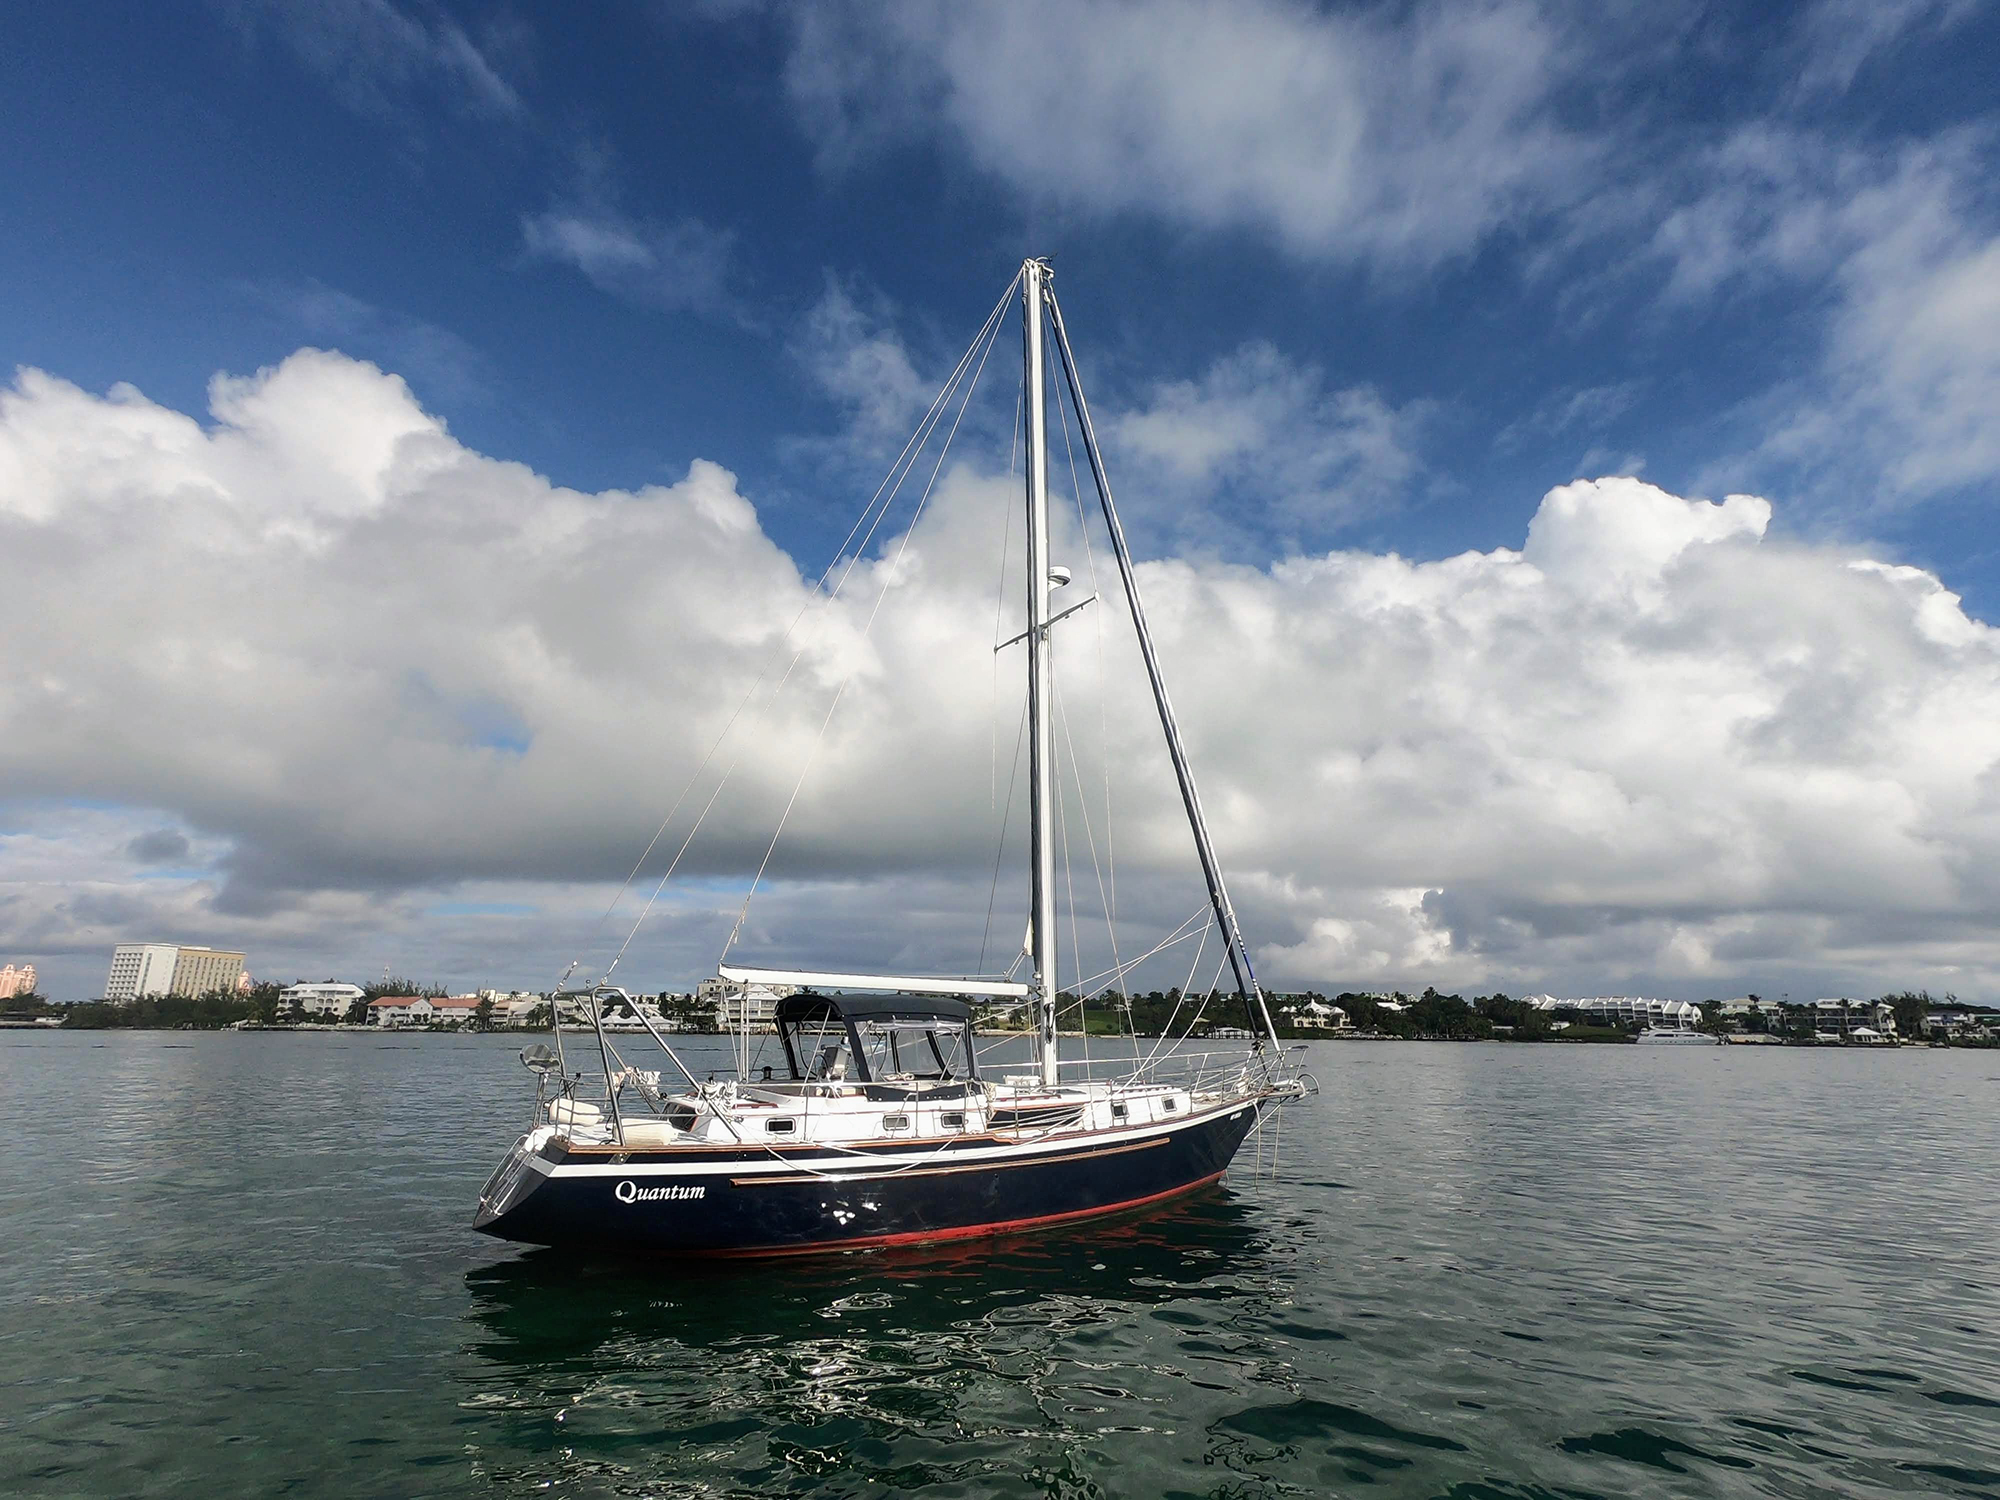 endeavour 42 sailboat for sale